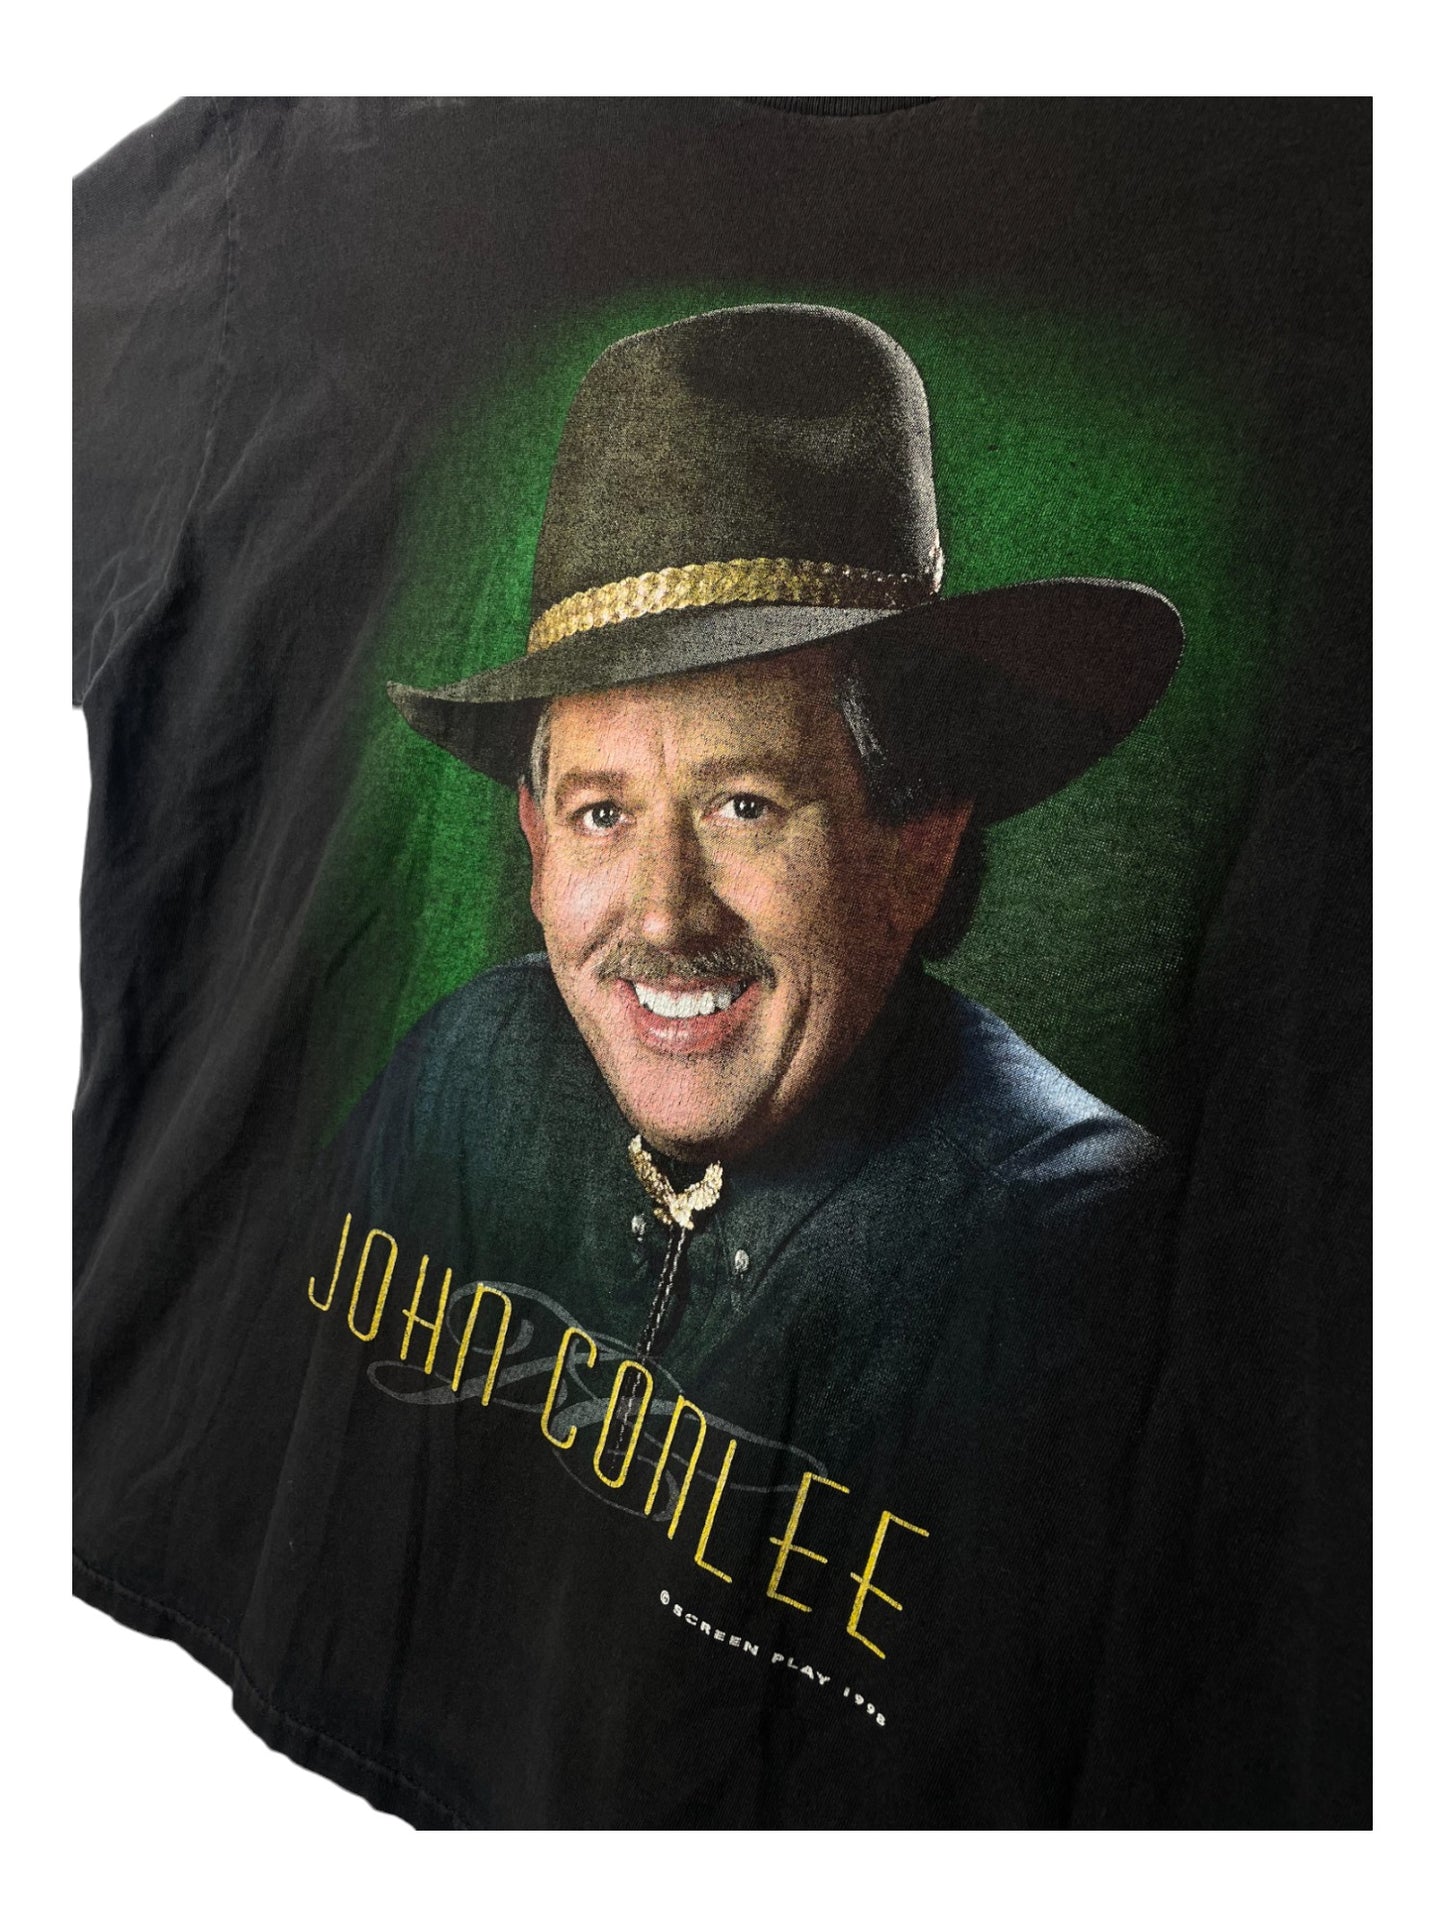 T-Shirt John Conlee